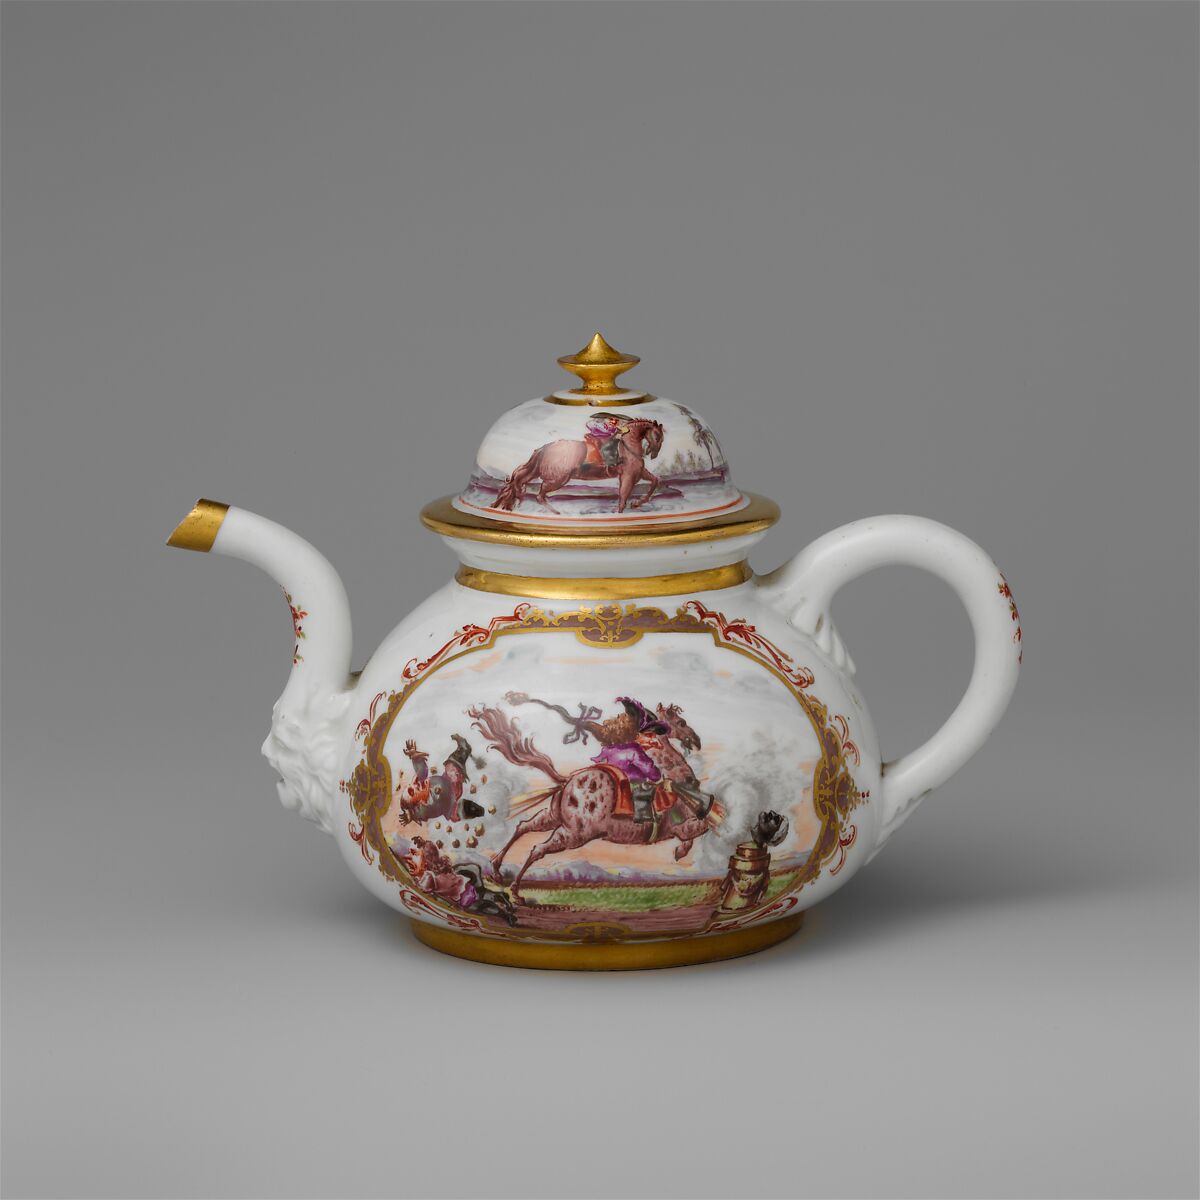 Teapot with equestrian scene, Meissen Manufactory  German, Hard-paste porcelain decorated in polychrome enamels, gold, German, Meissen